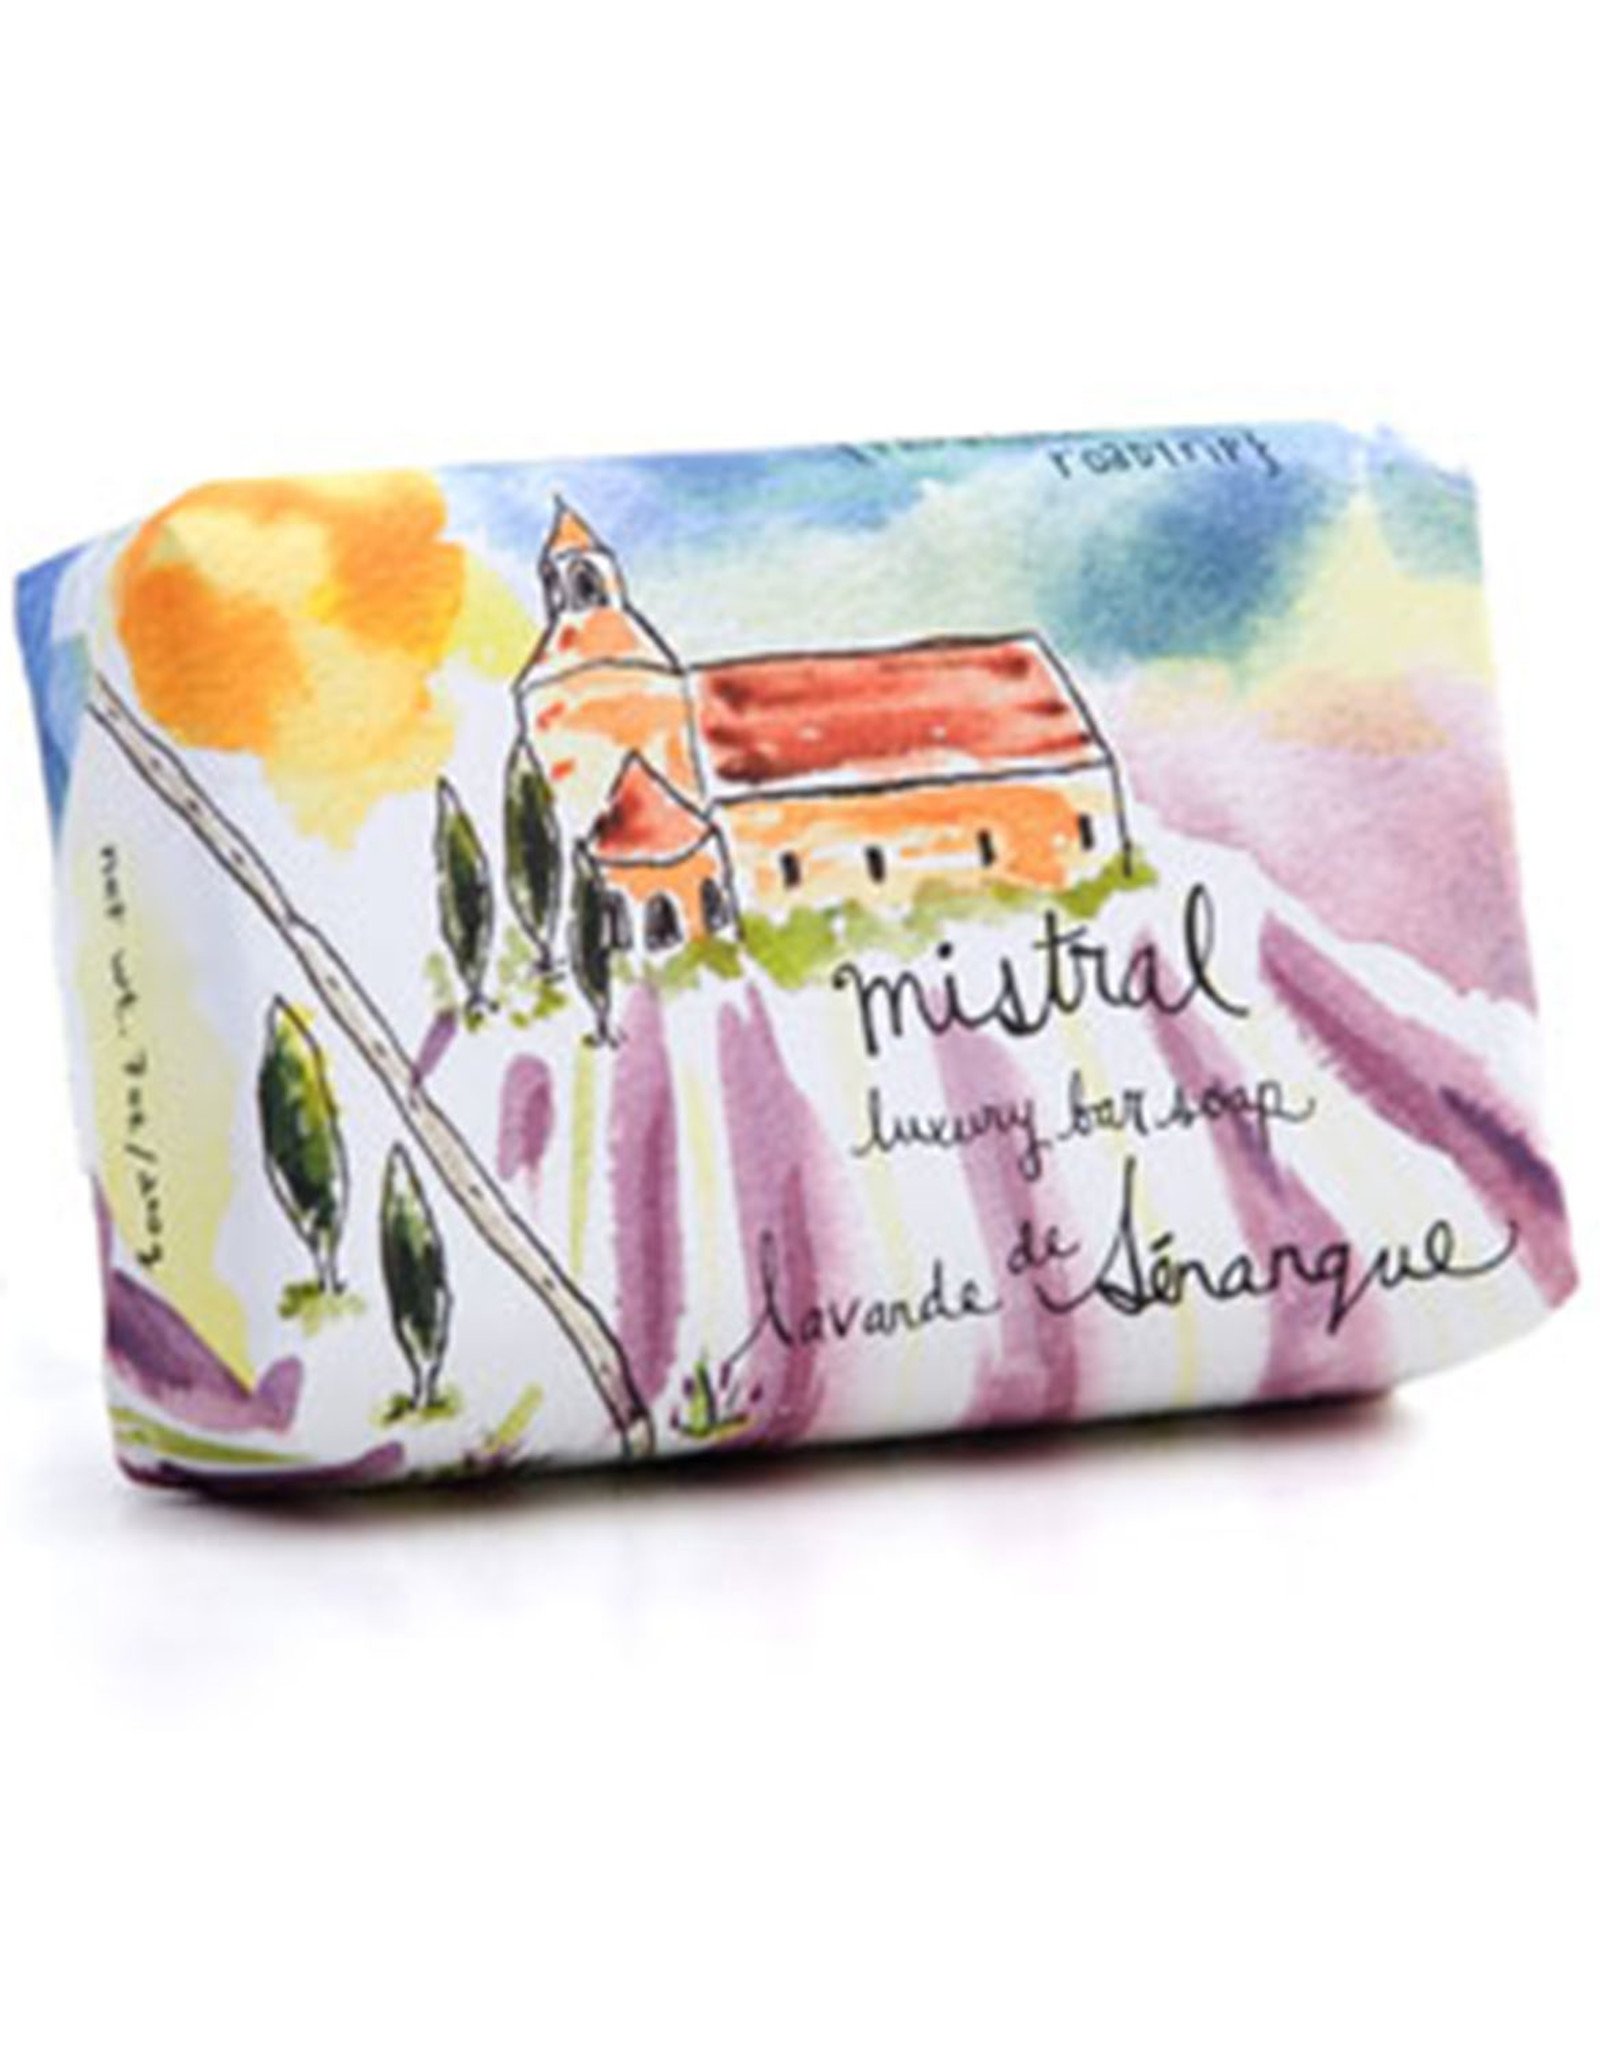 Senanque Lavender Soap 7 oz - Mistral Provence Roadtrip Collection